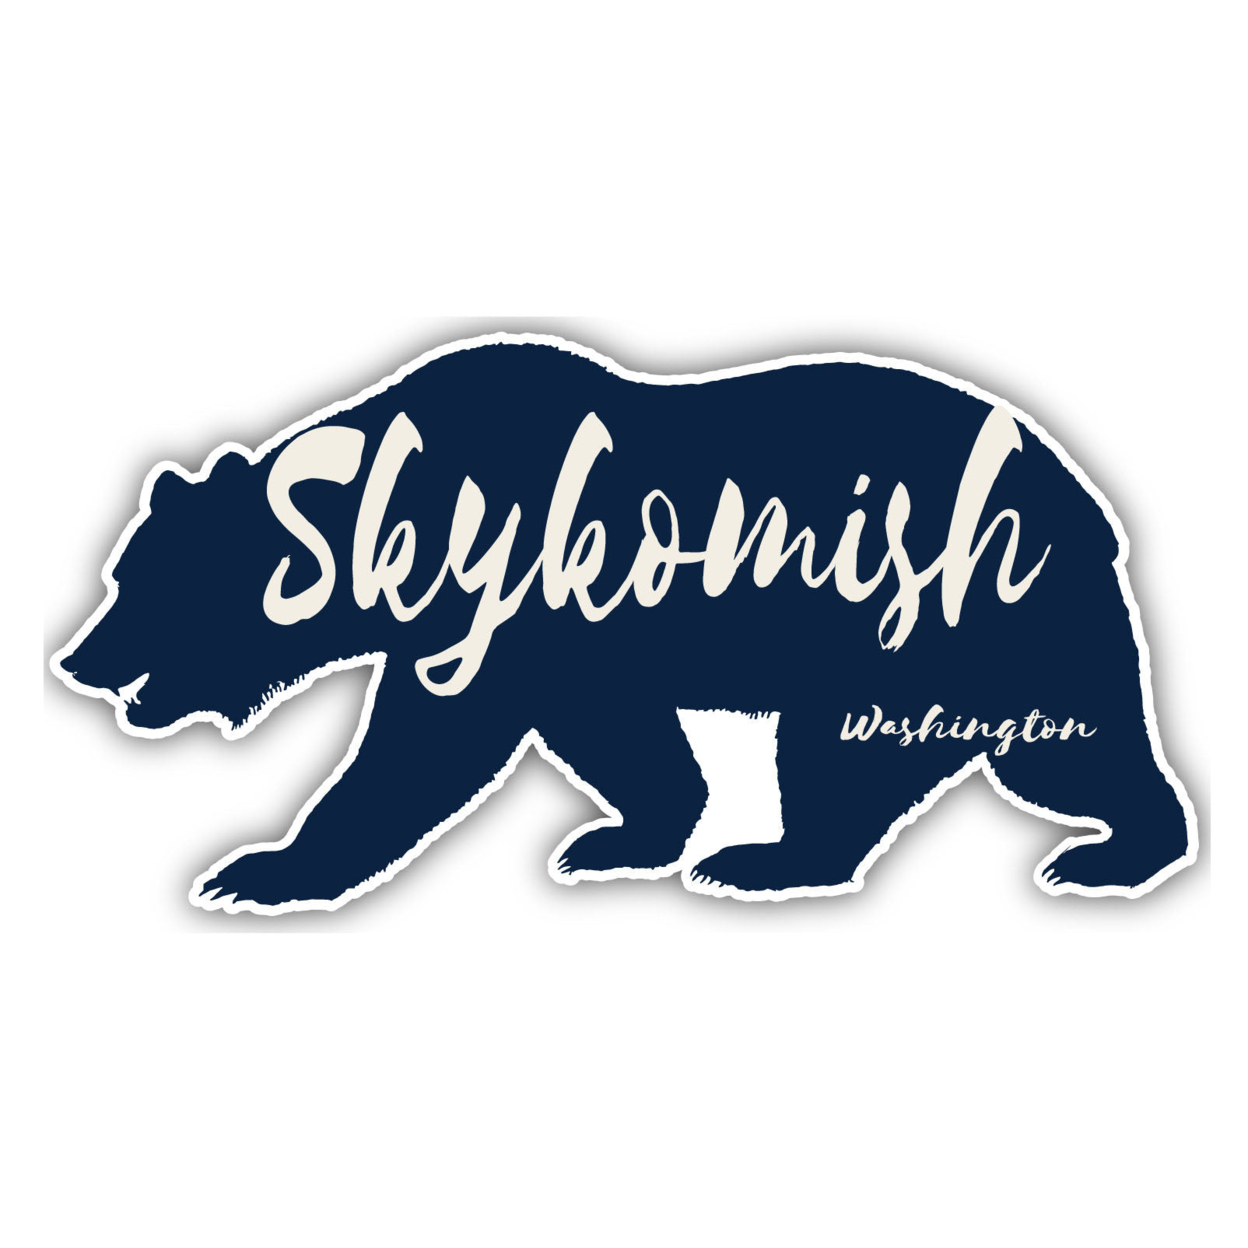 Skykomish Washington Souvenir Decorative Stickers (Choose Theme And Size) - Single Unit, 4-Inch, Bear